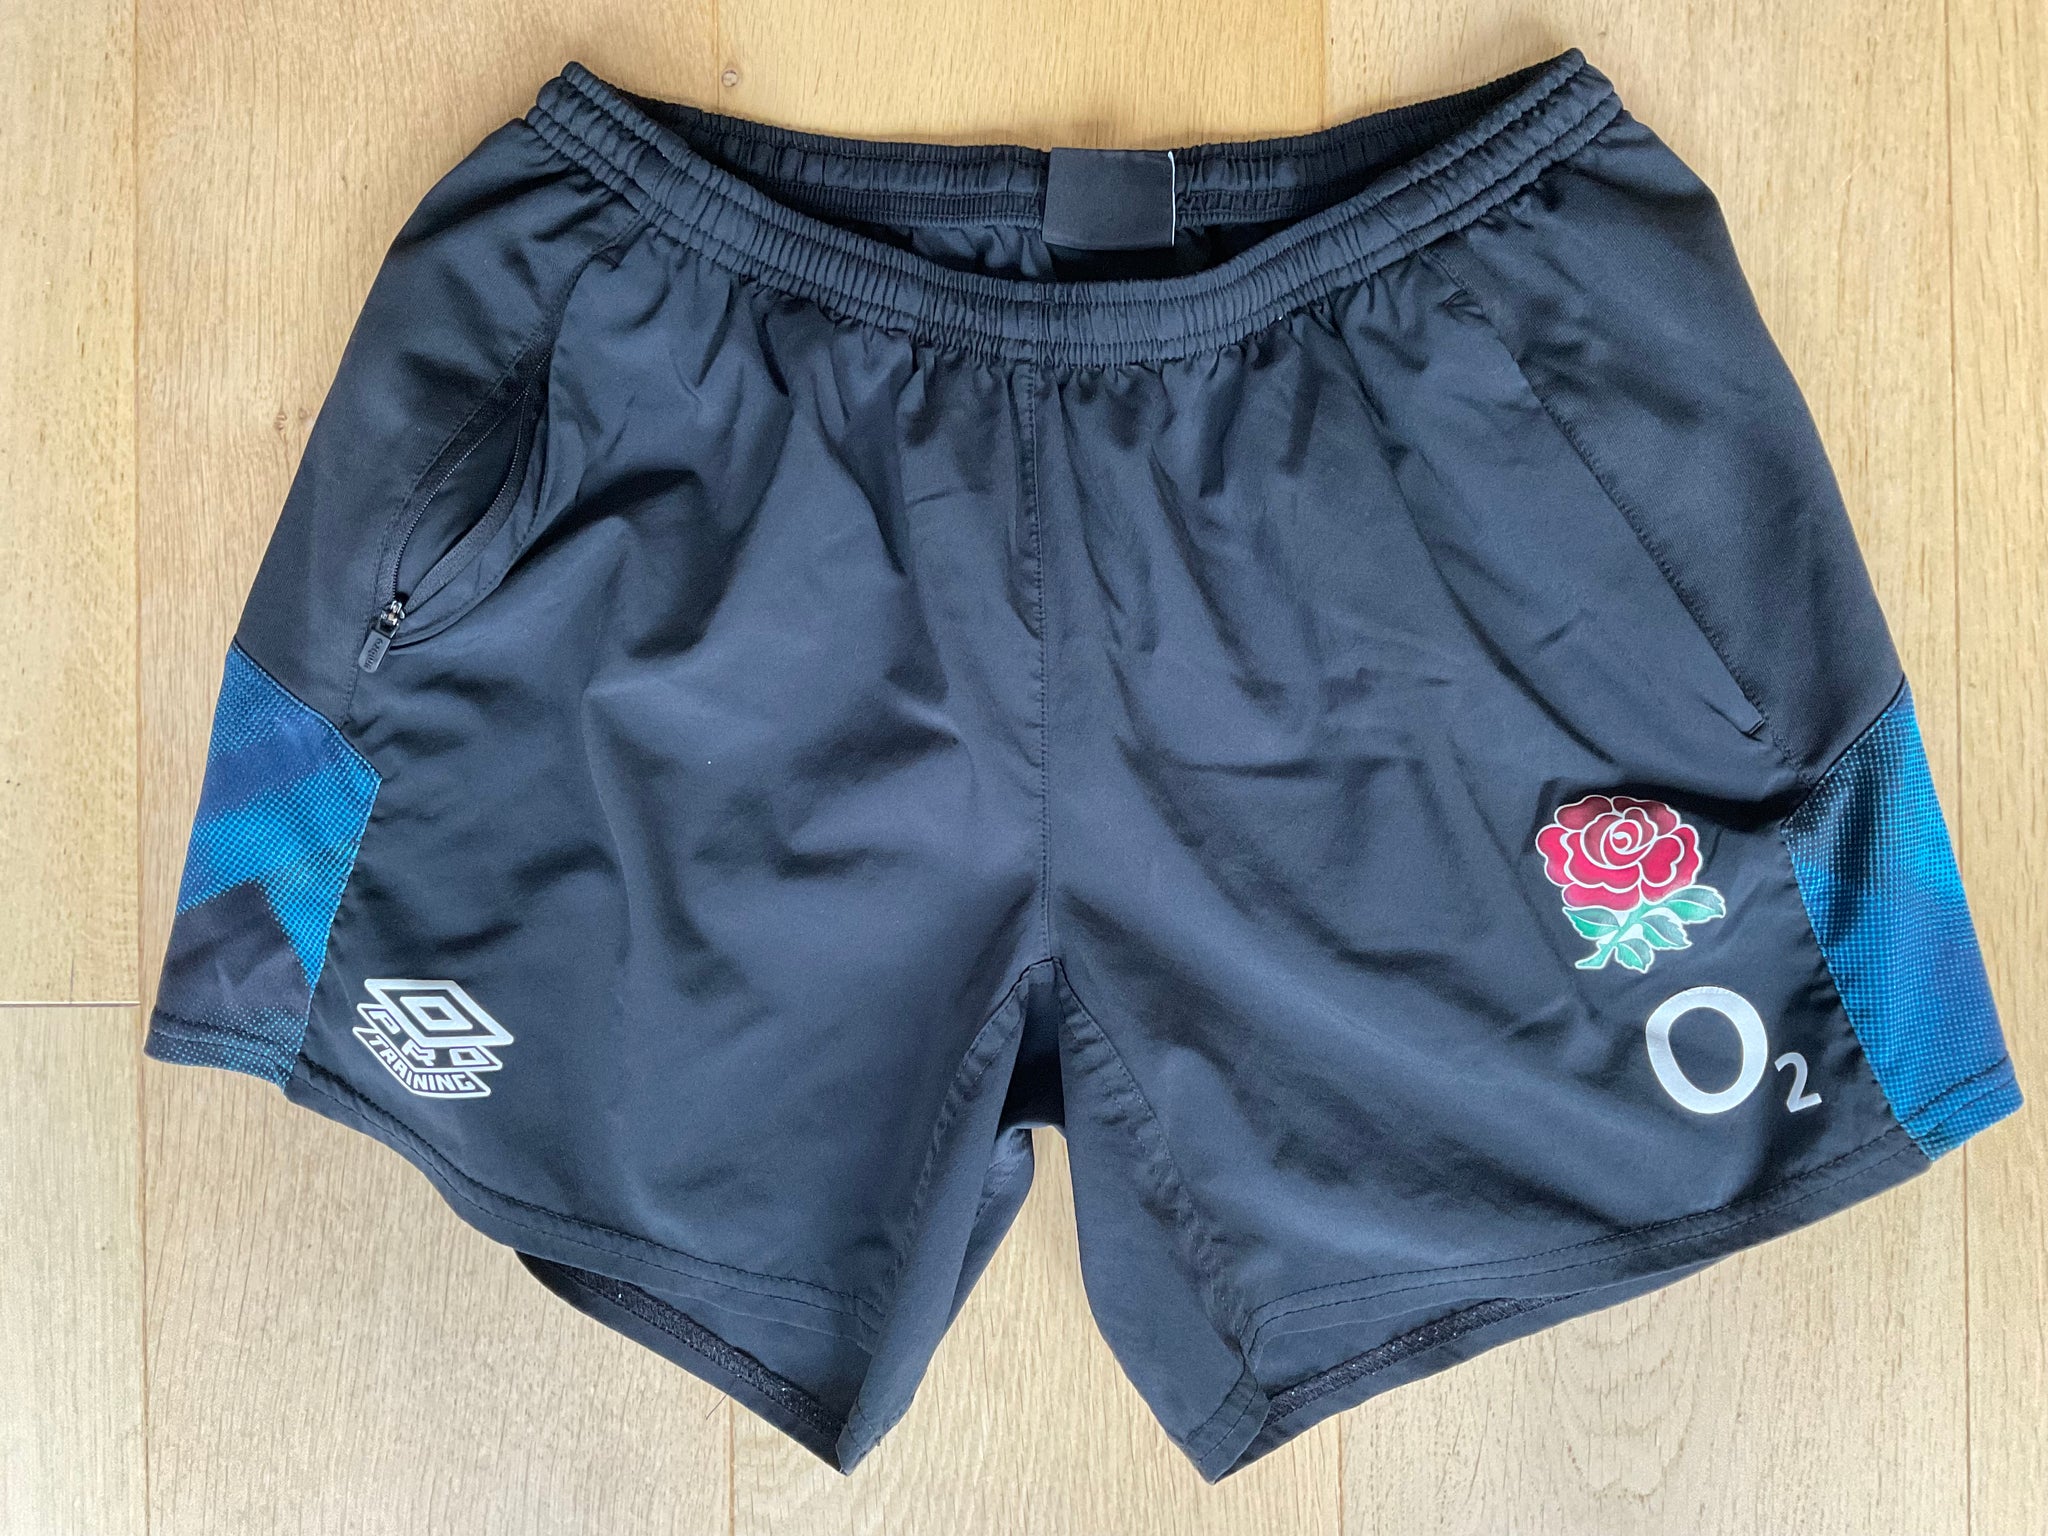 Alex Matthews - England Rugby Gym Shorts [Black with Blue]